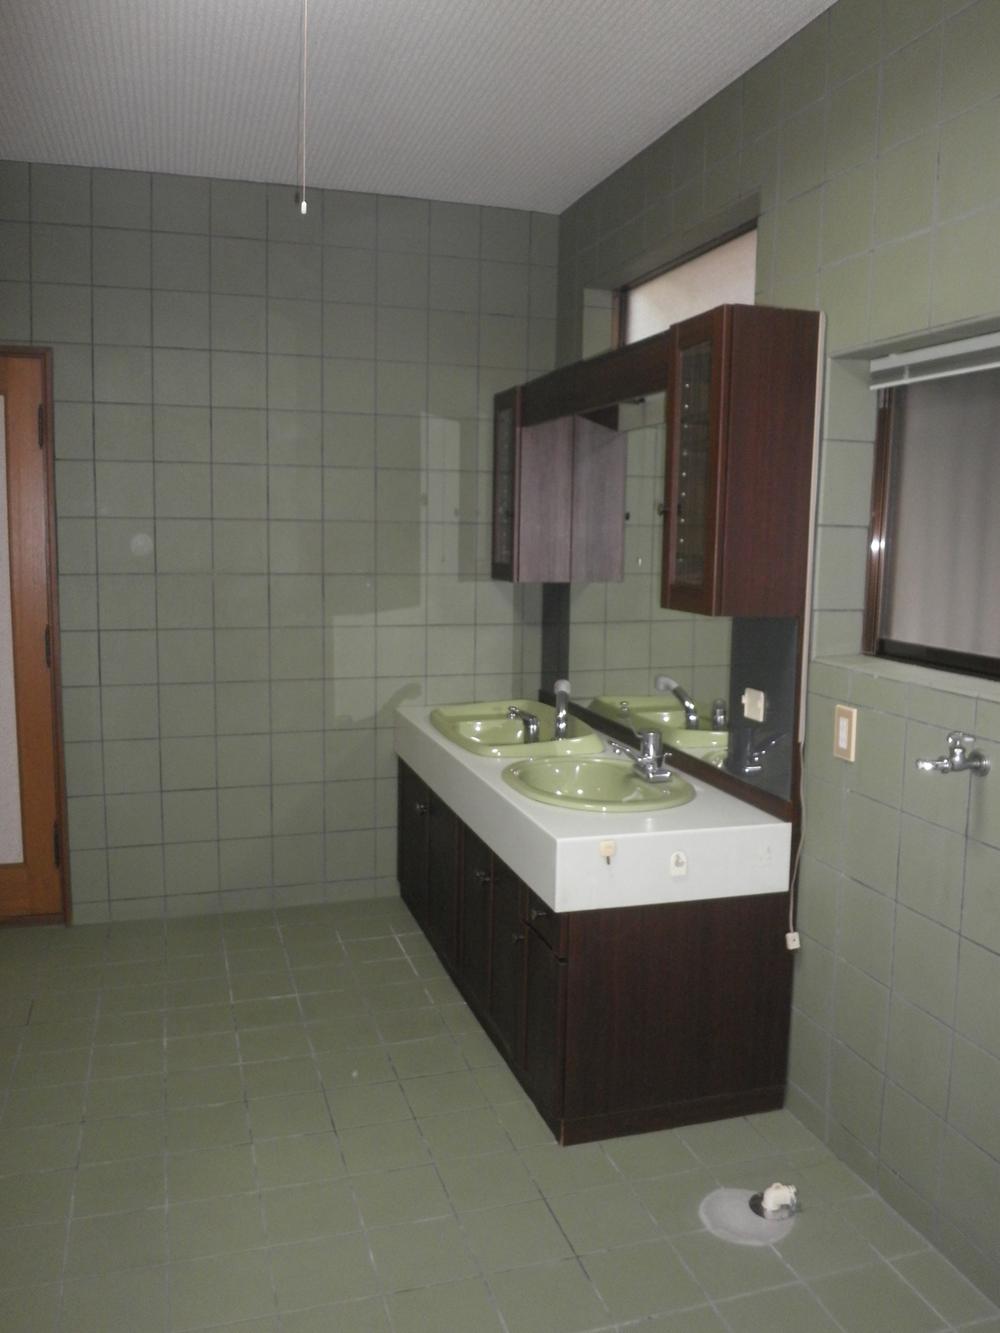 Wash basin, toilet. This basin dressing room